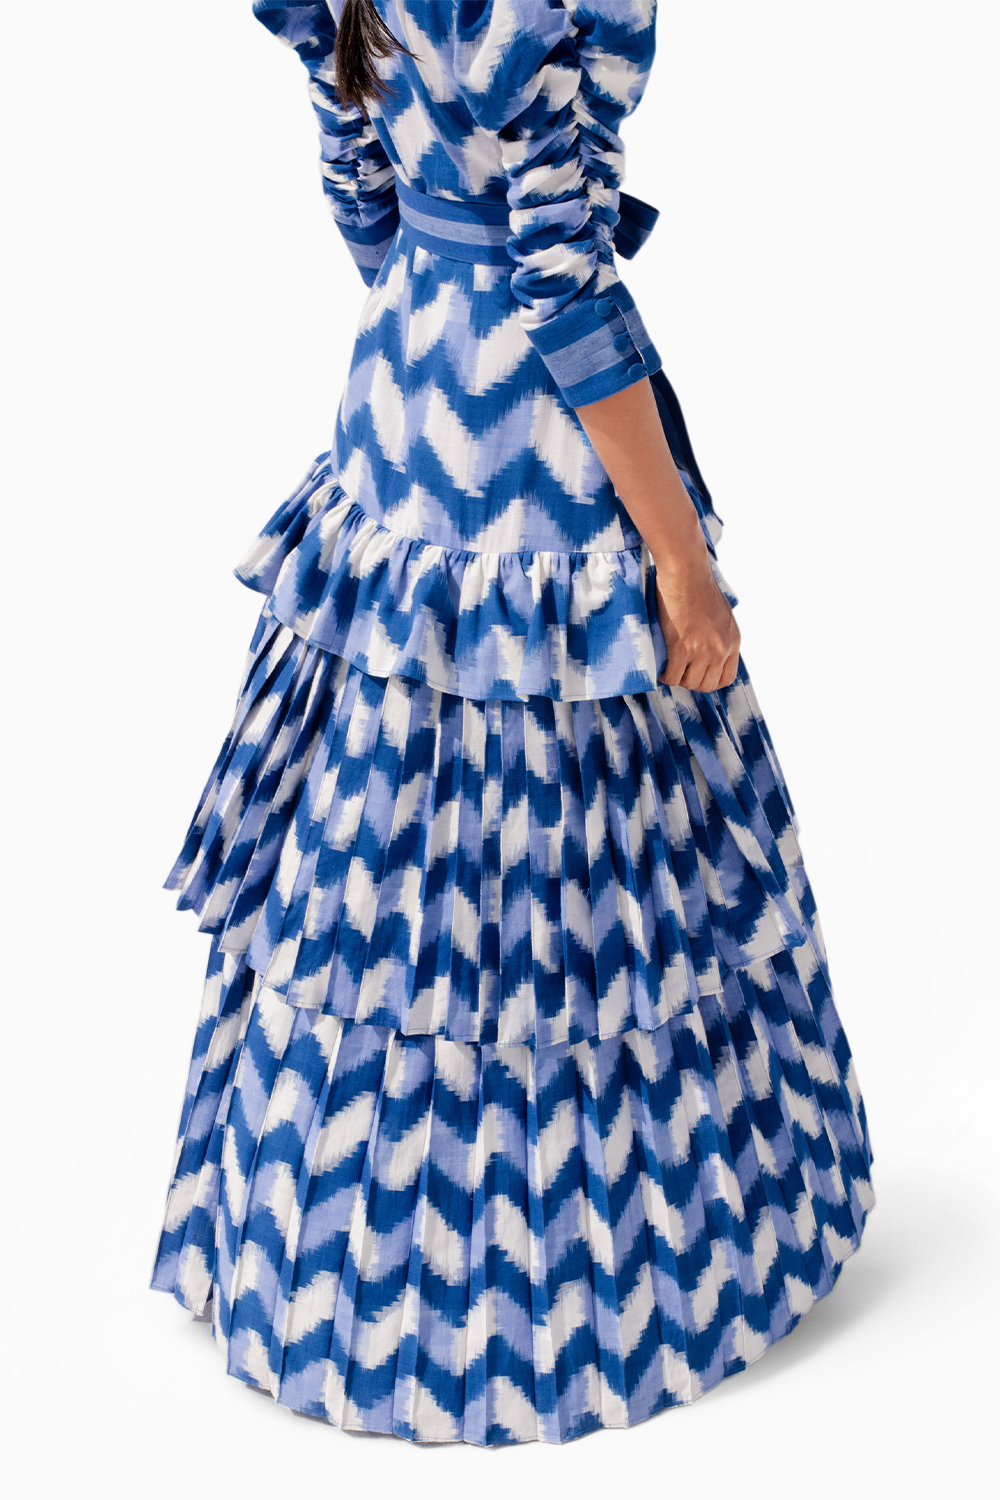 Waves Lapis Lazuli Dress